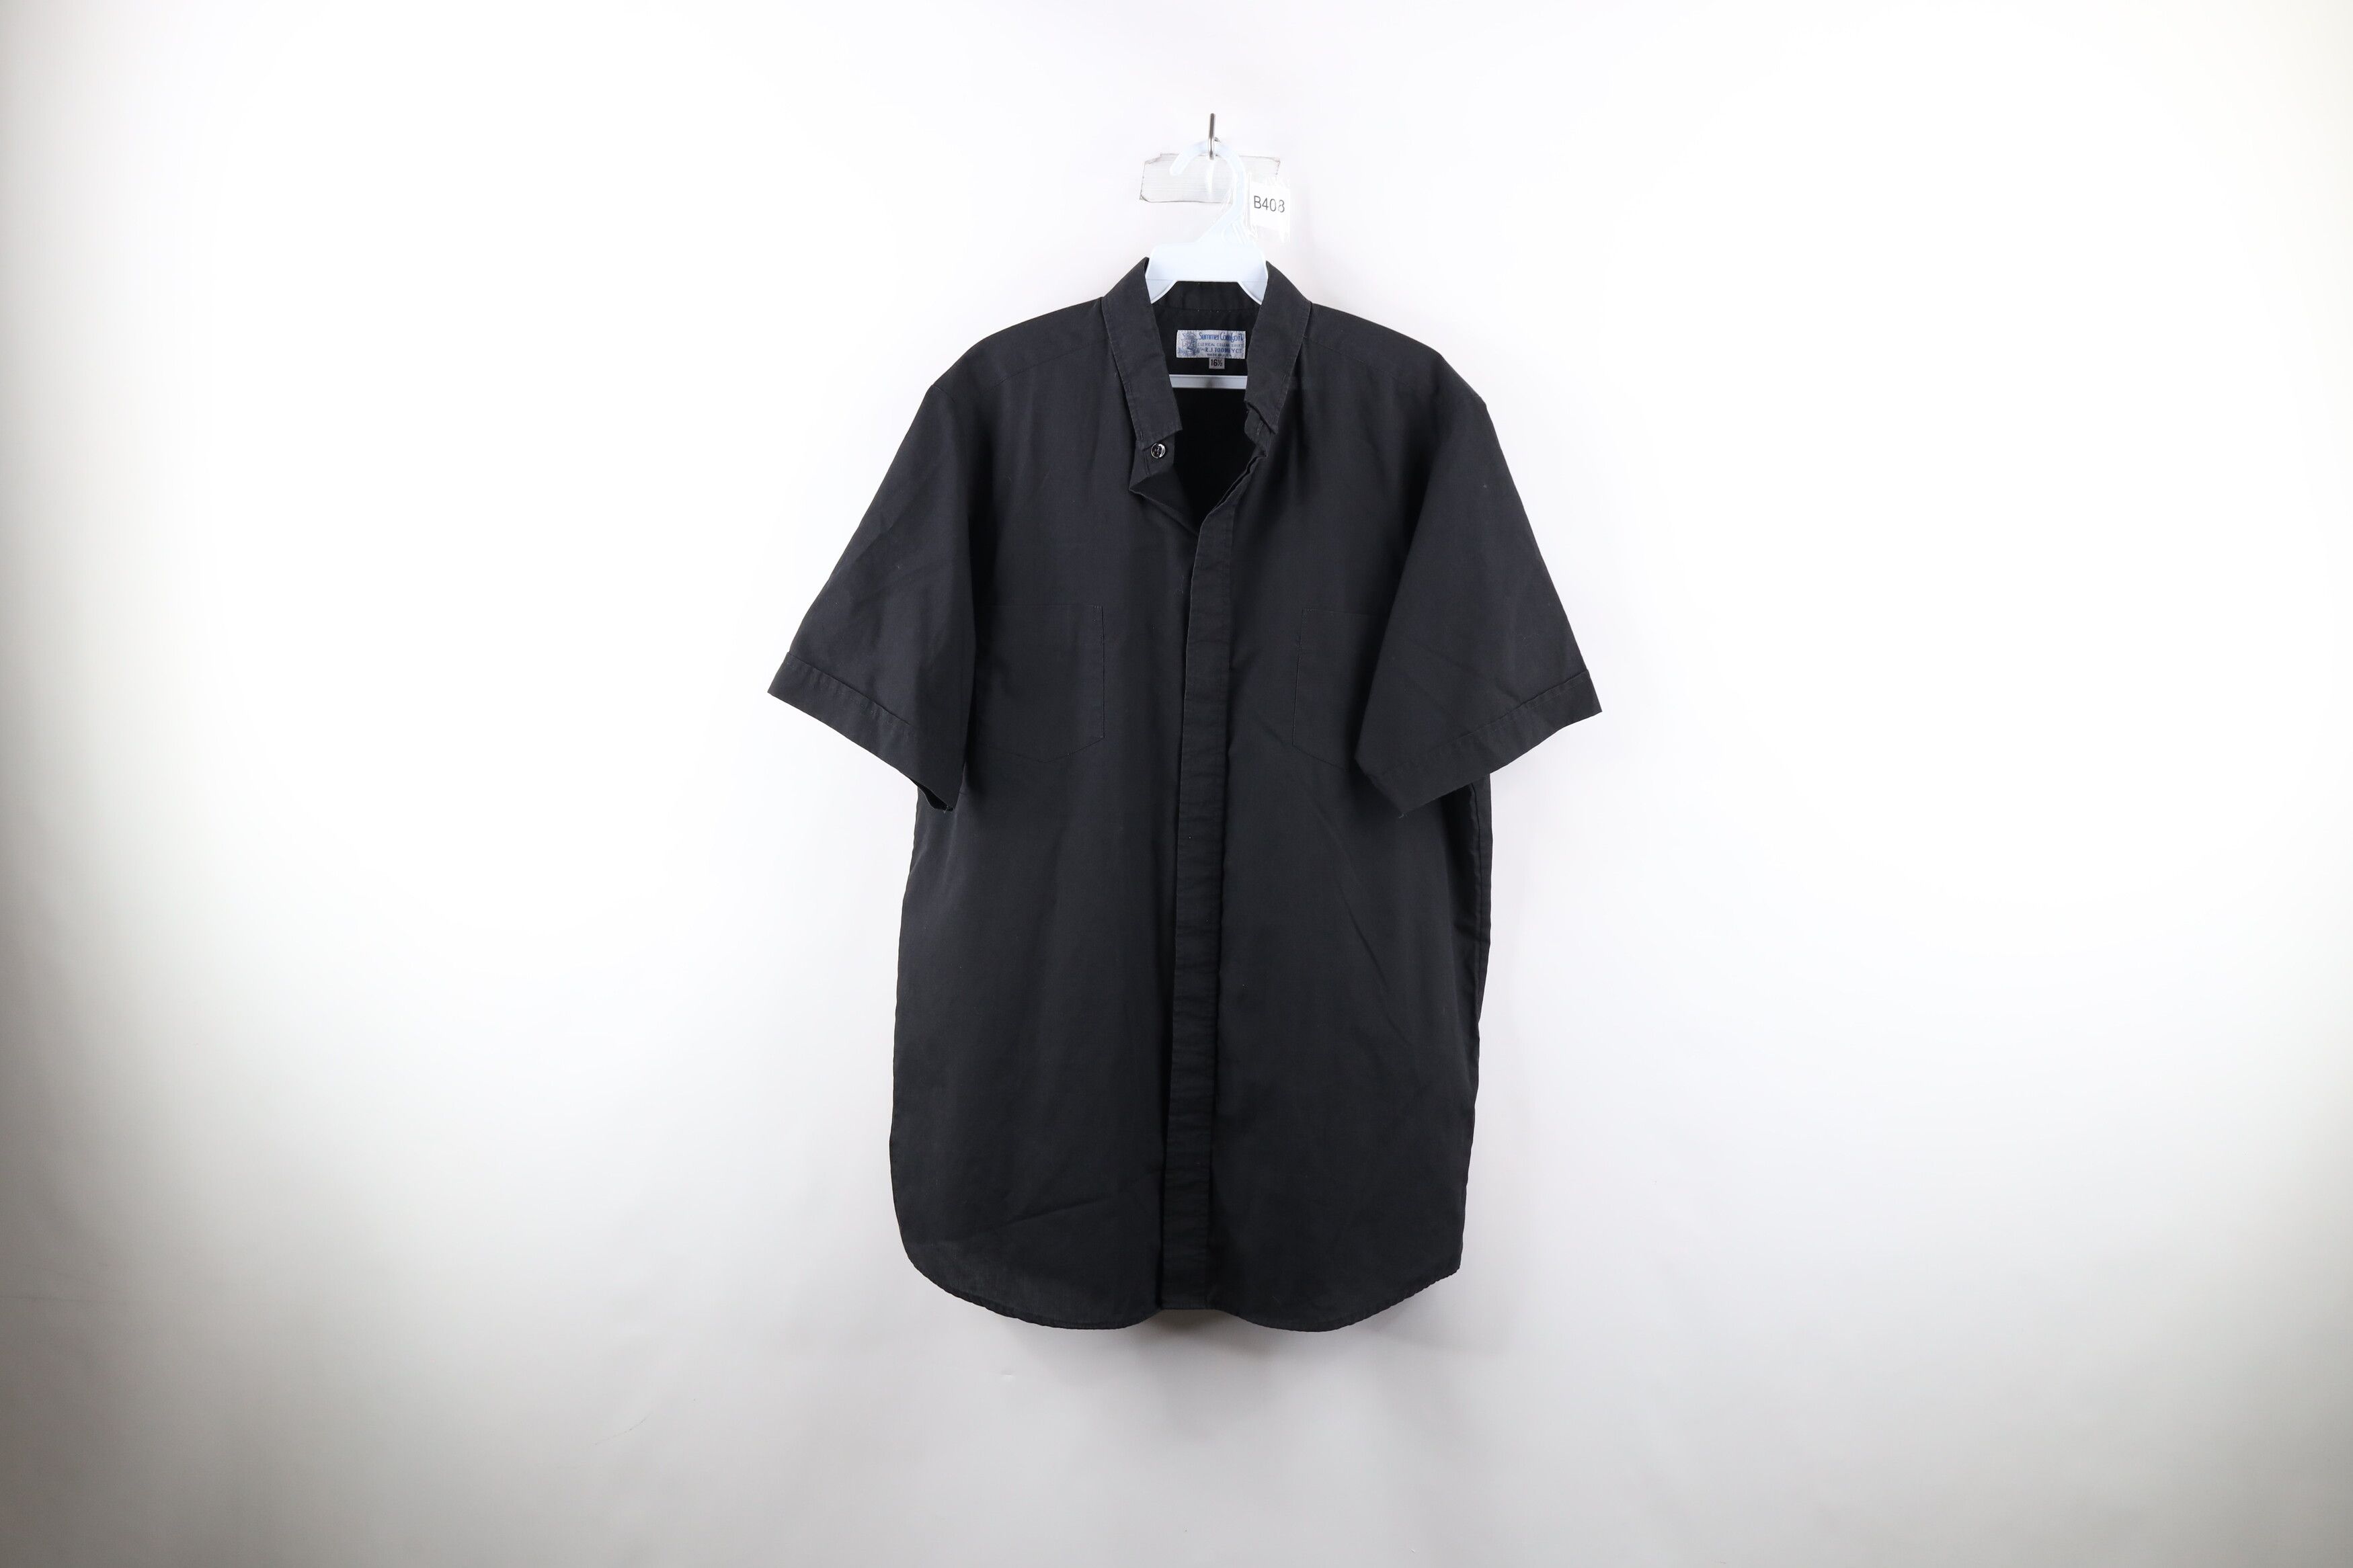 Vintage Vintage 60s 70s Streetwear Collar Button Shirt Black USA Size US M / EU 48-50 / 2 - 1 Preview